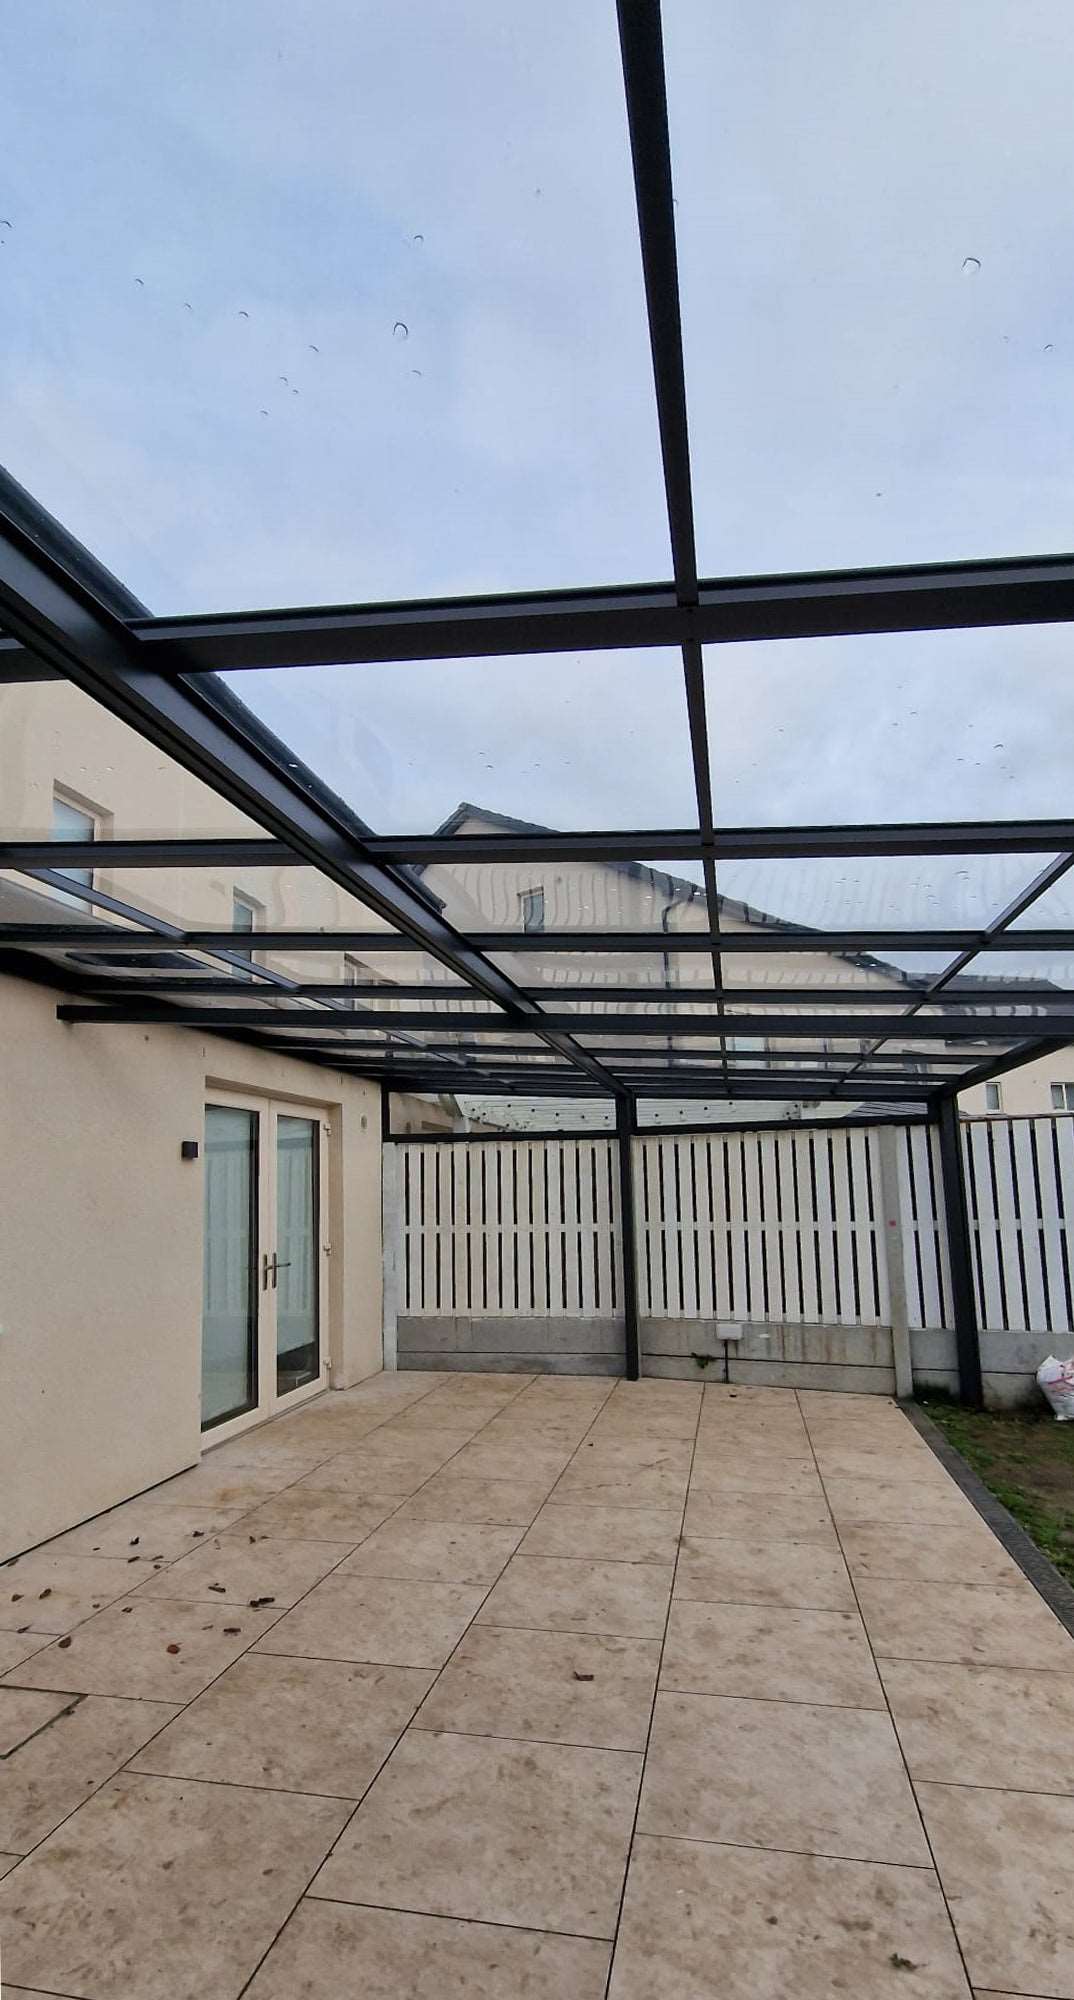 Aluminium canopy installed in Bellingsmore, Dublin 15